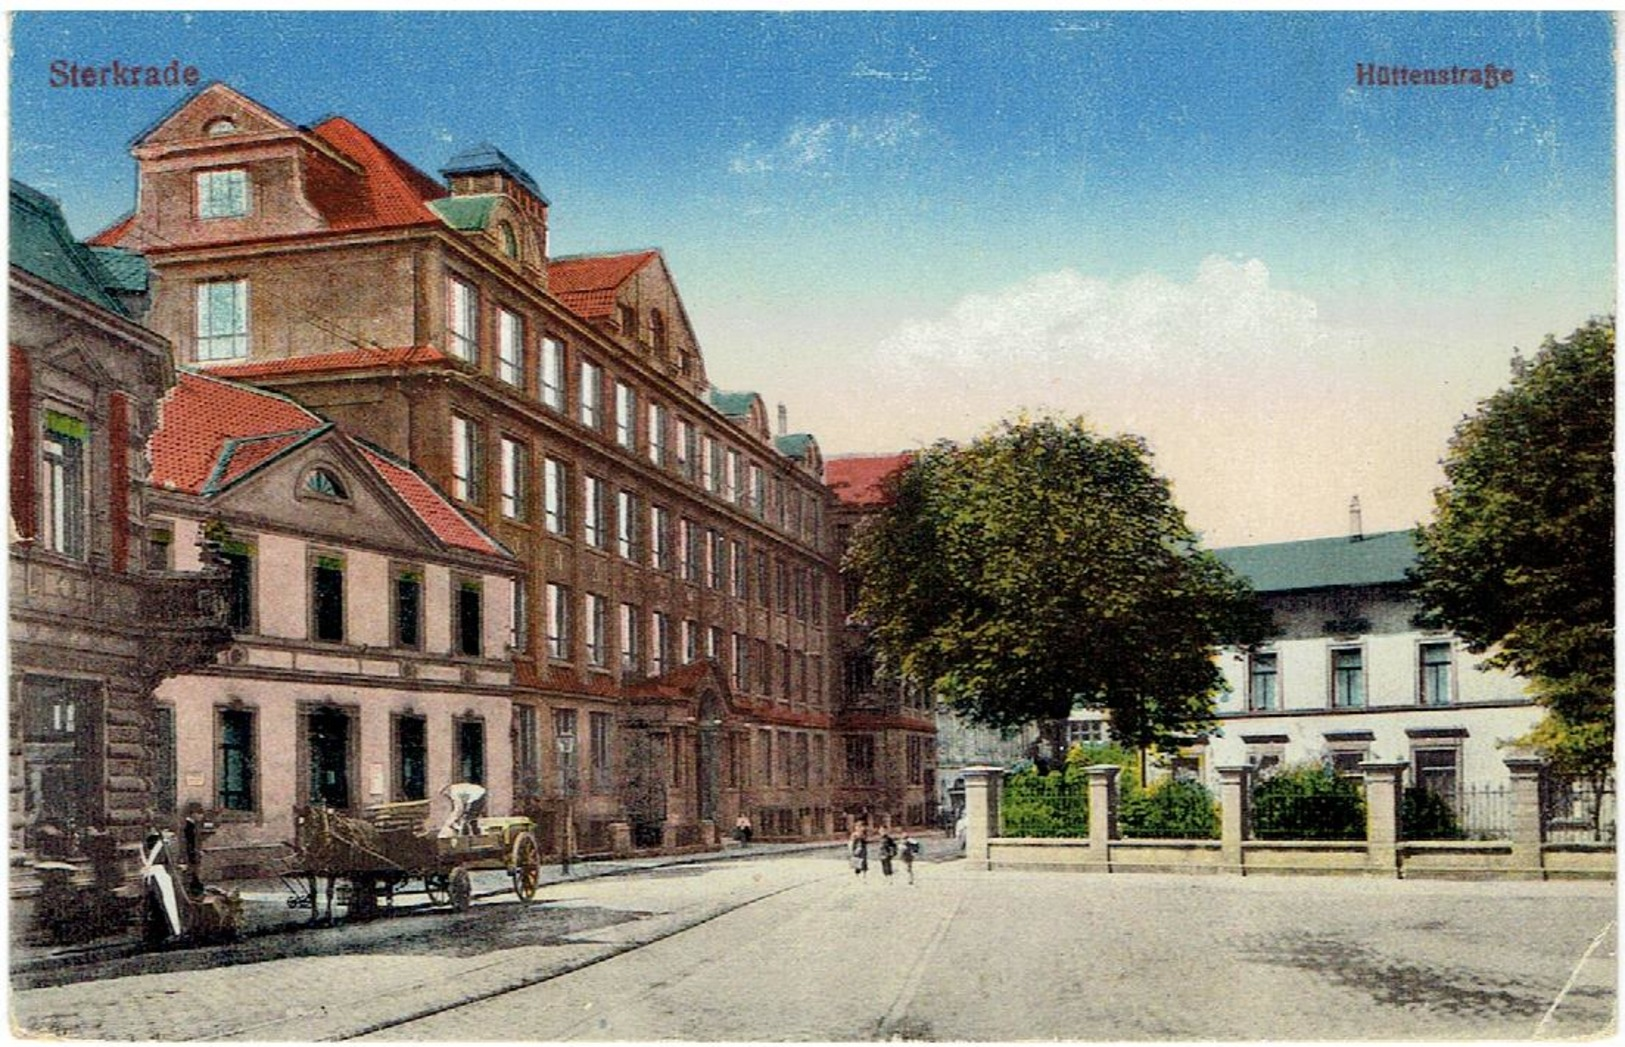 STERKRADE - Oberhausen - Hüttenstrasse - Militär Post 1923 - Poste Militaire - Oberhausen